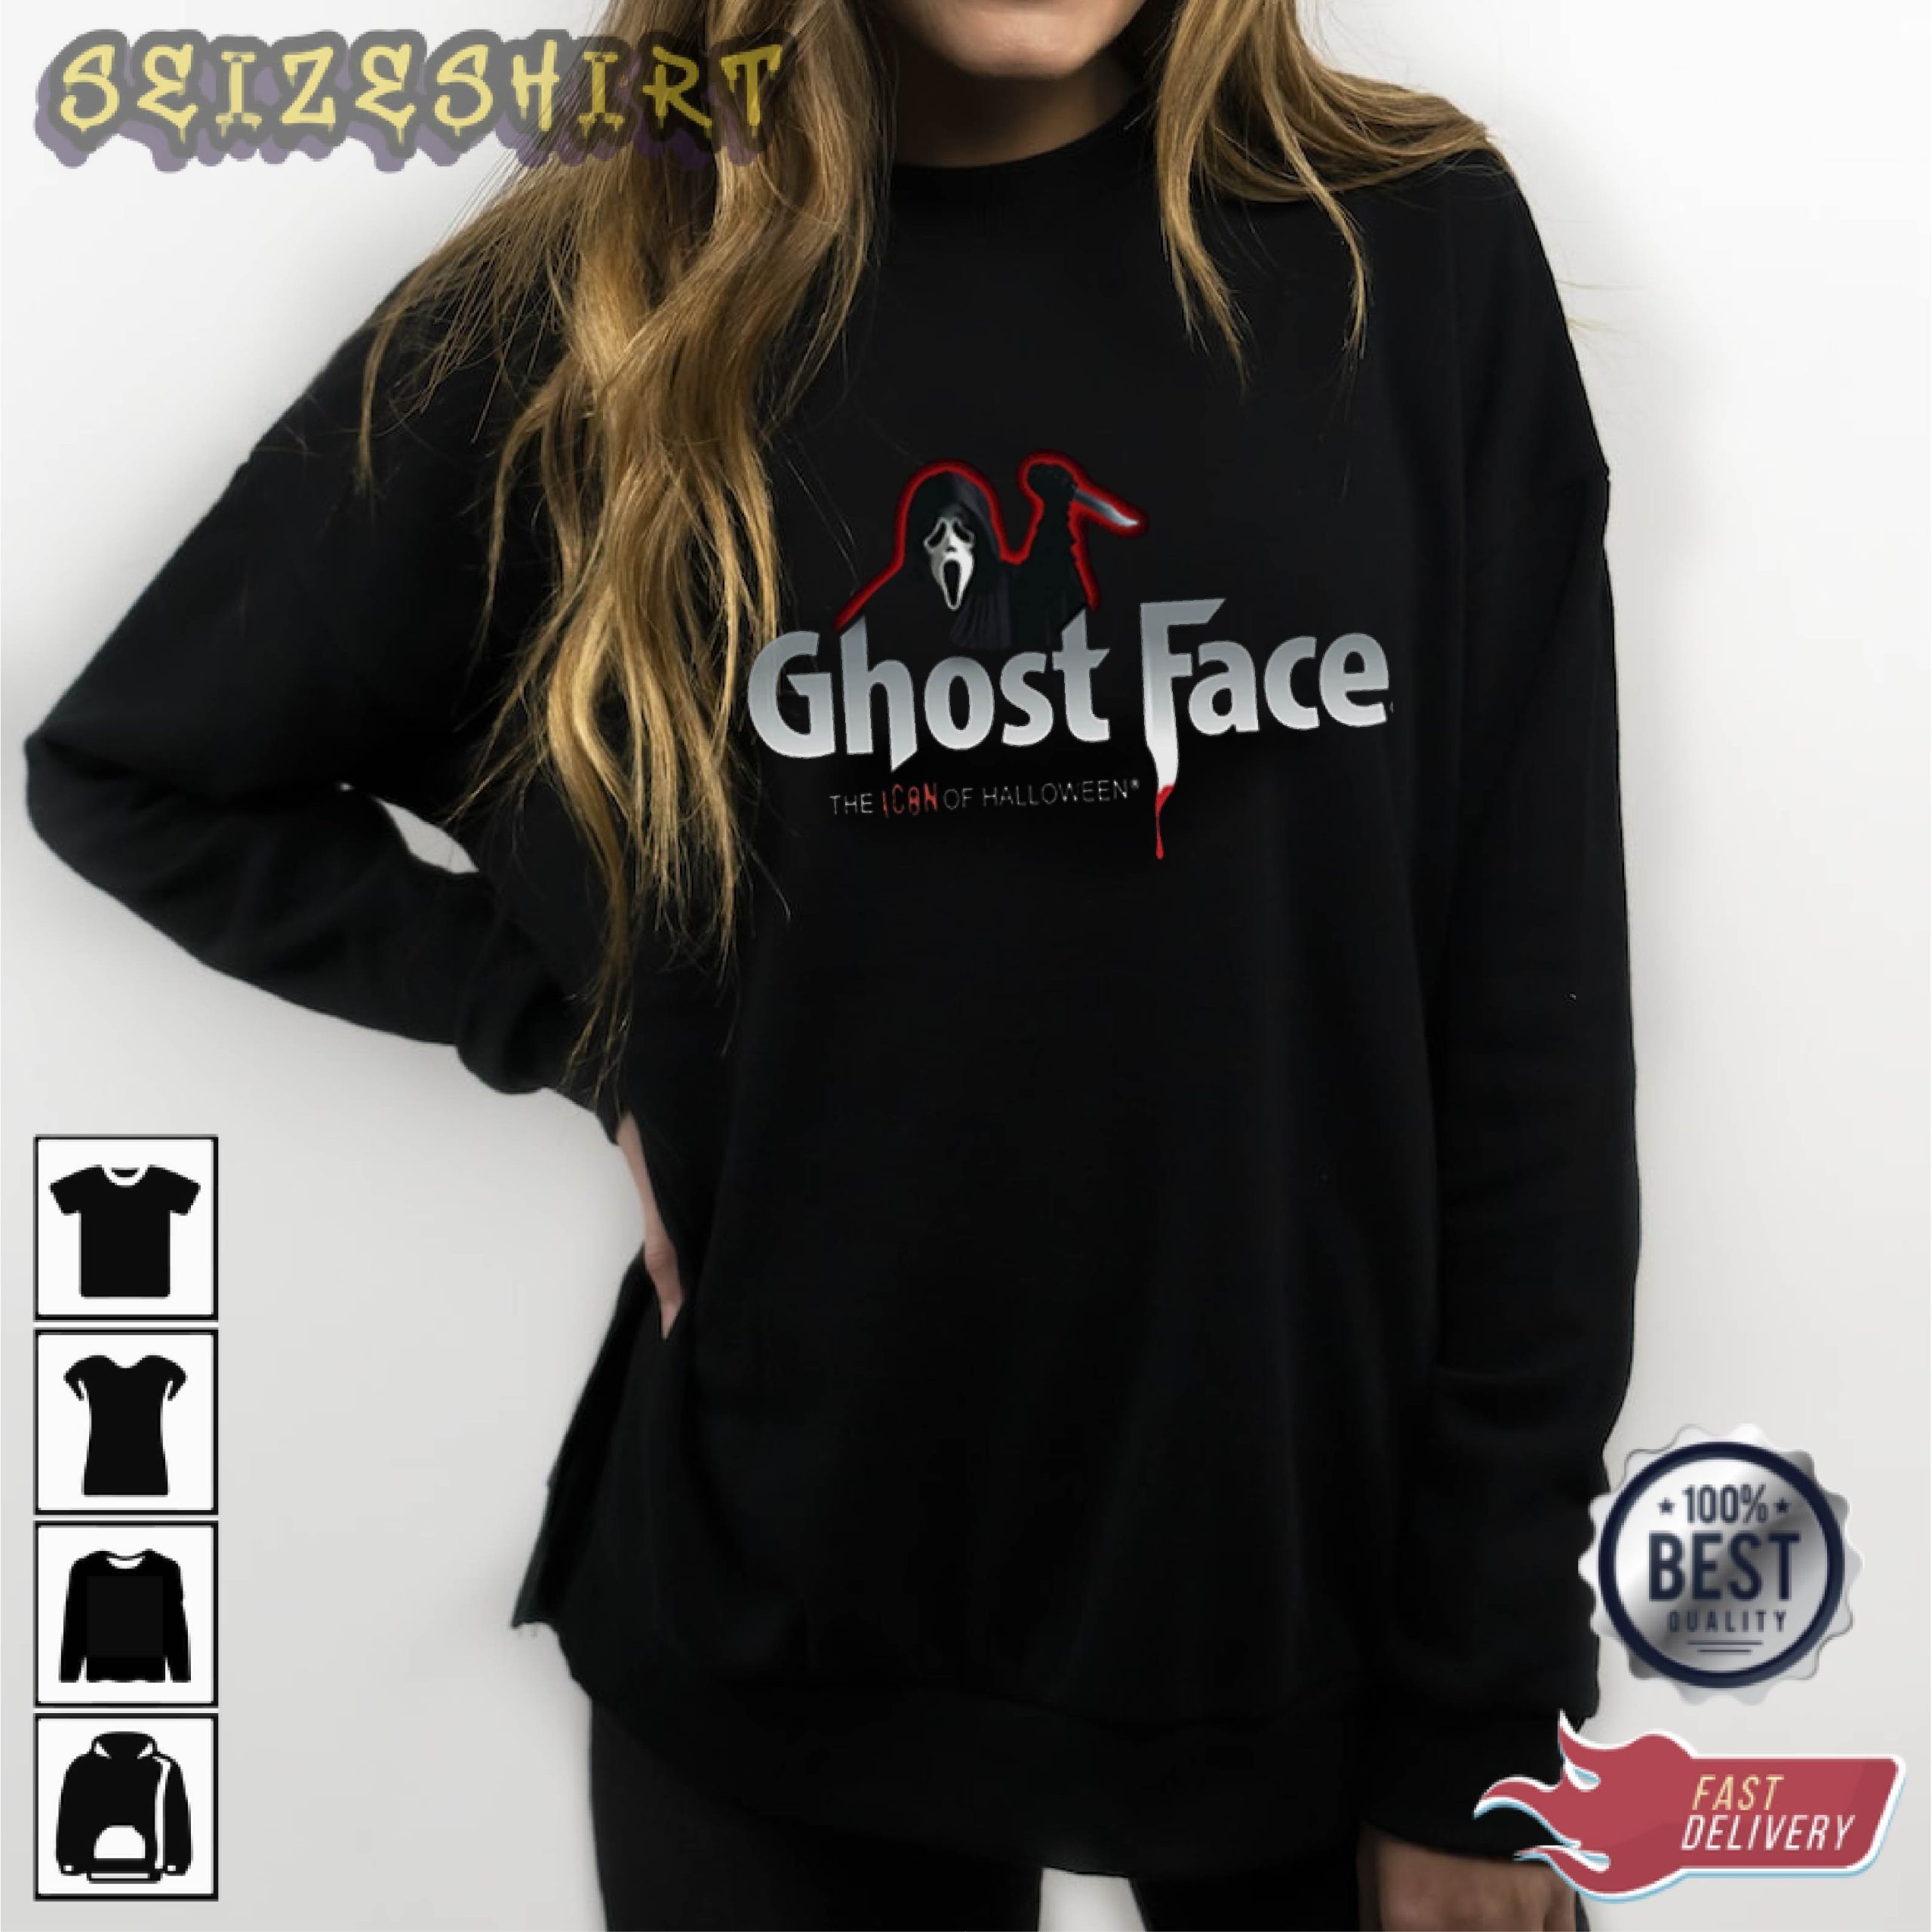 Ghost Face Focus Alphabet HOT Graphic Tee Long Sleeve Shirt